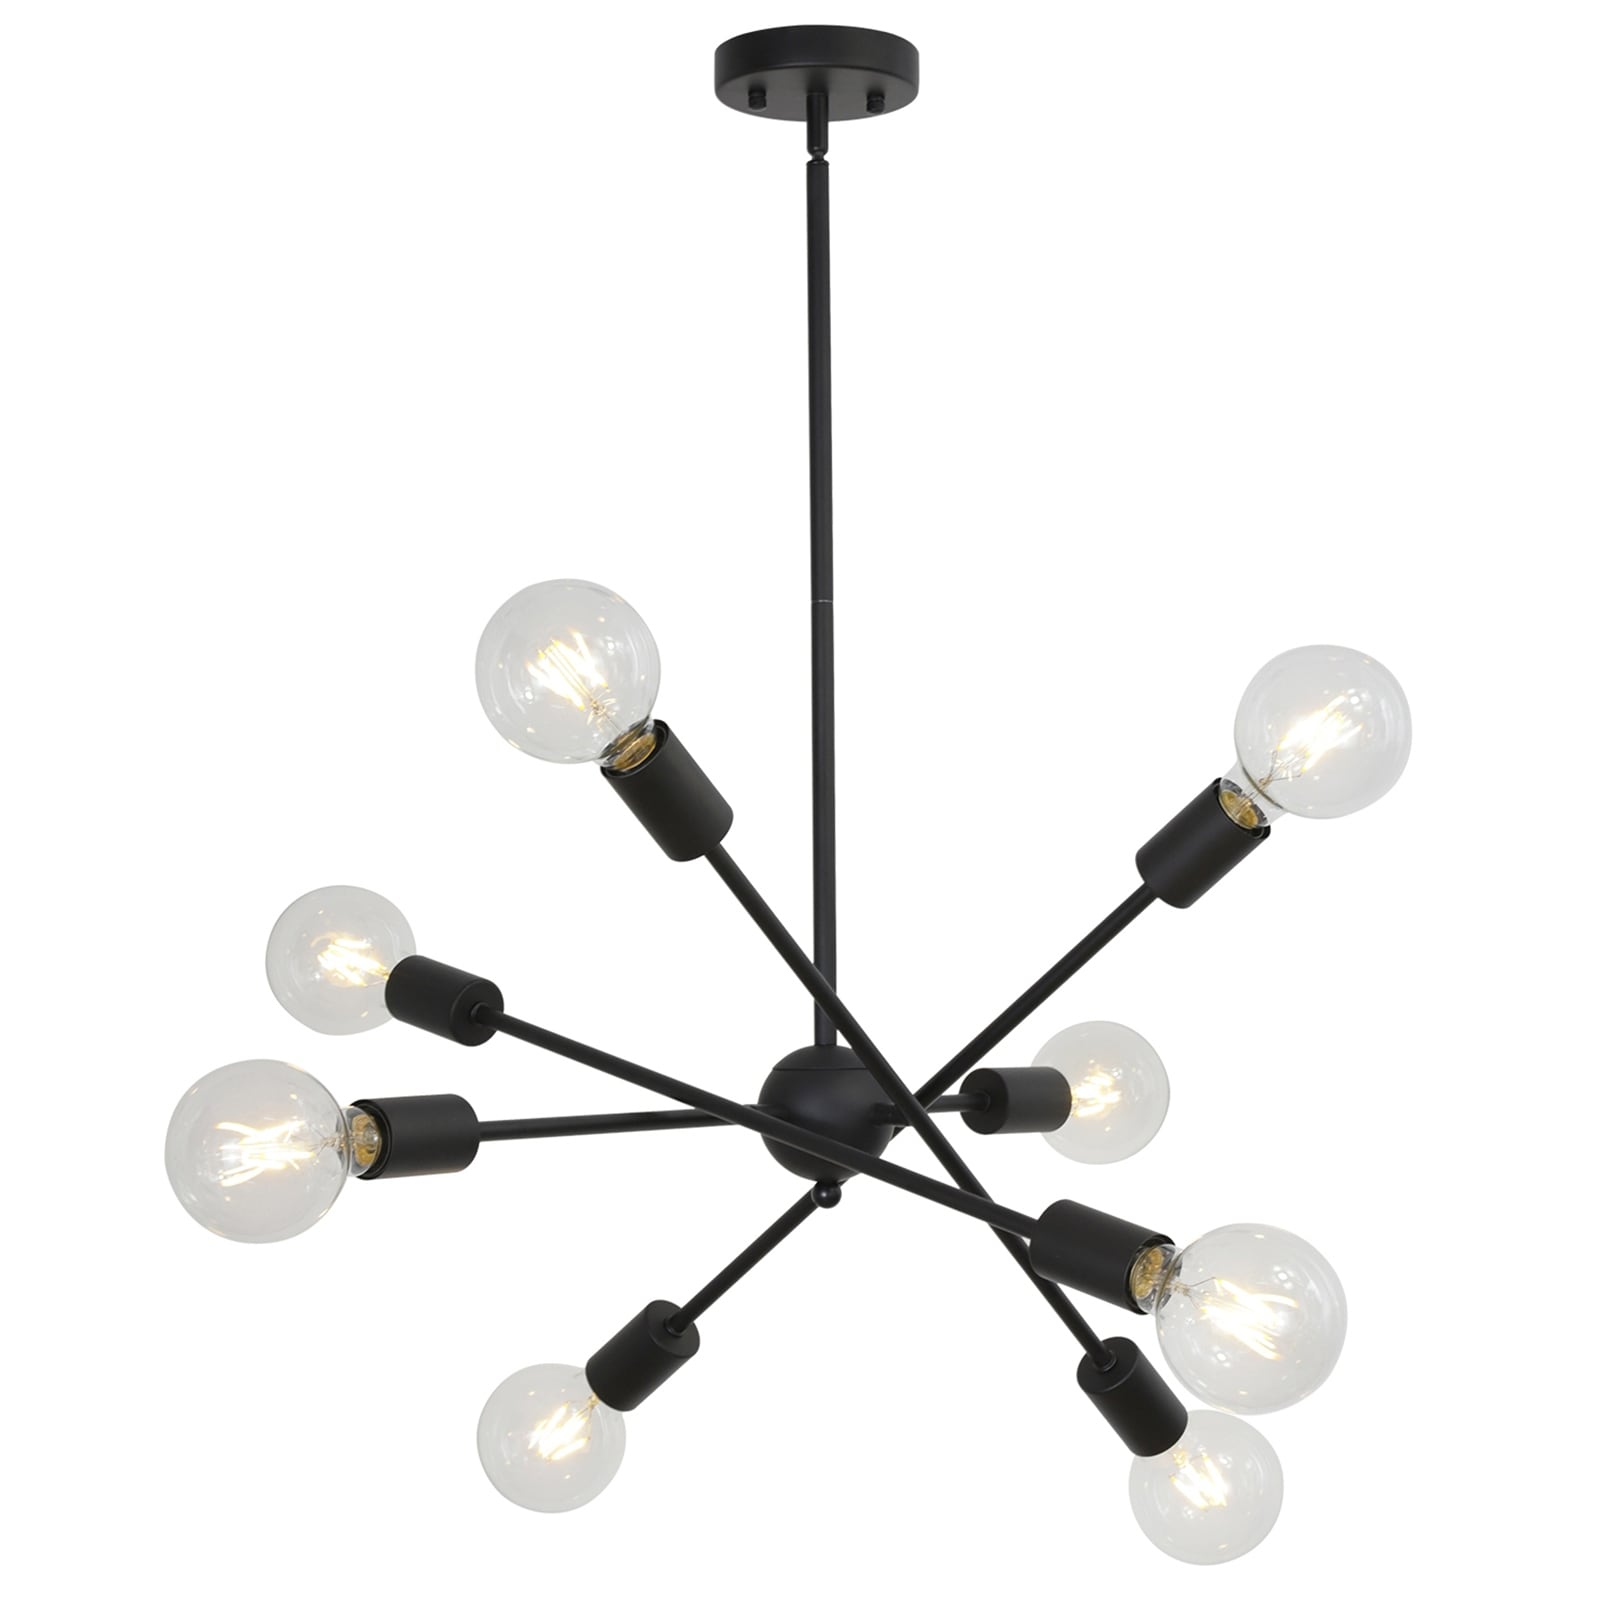 Sputnik Chandelier Industrial 8 Lampholder Pendant Lamp Ceiling Lighting Fixture 